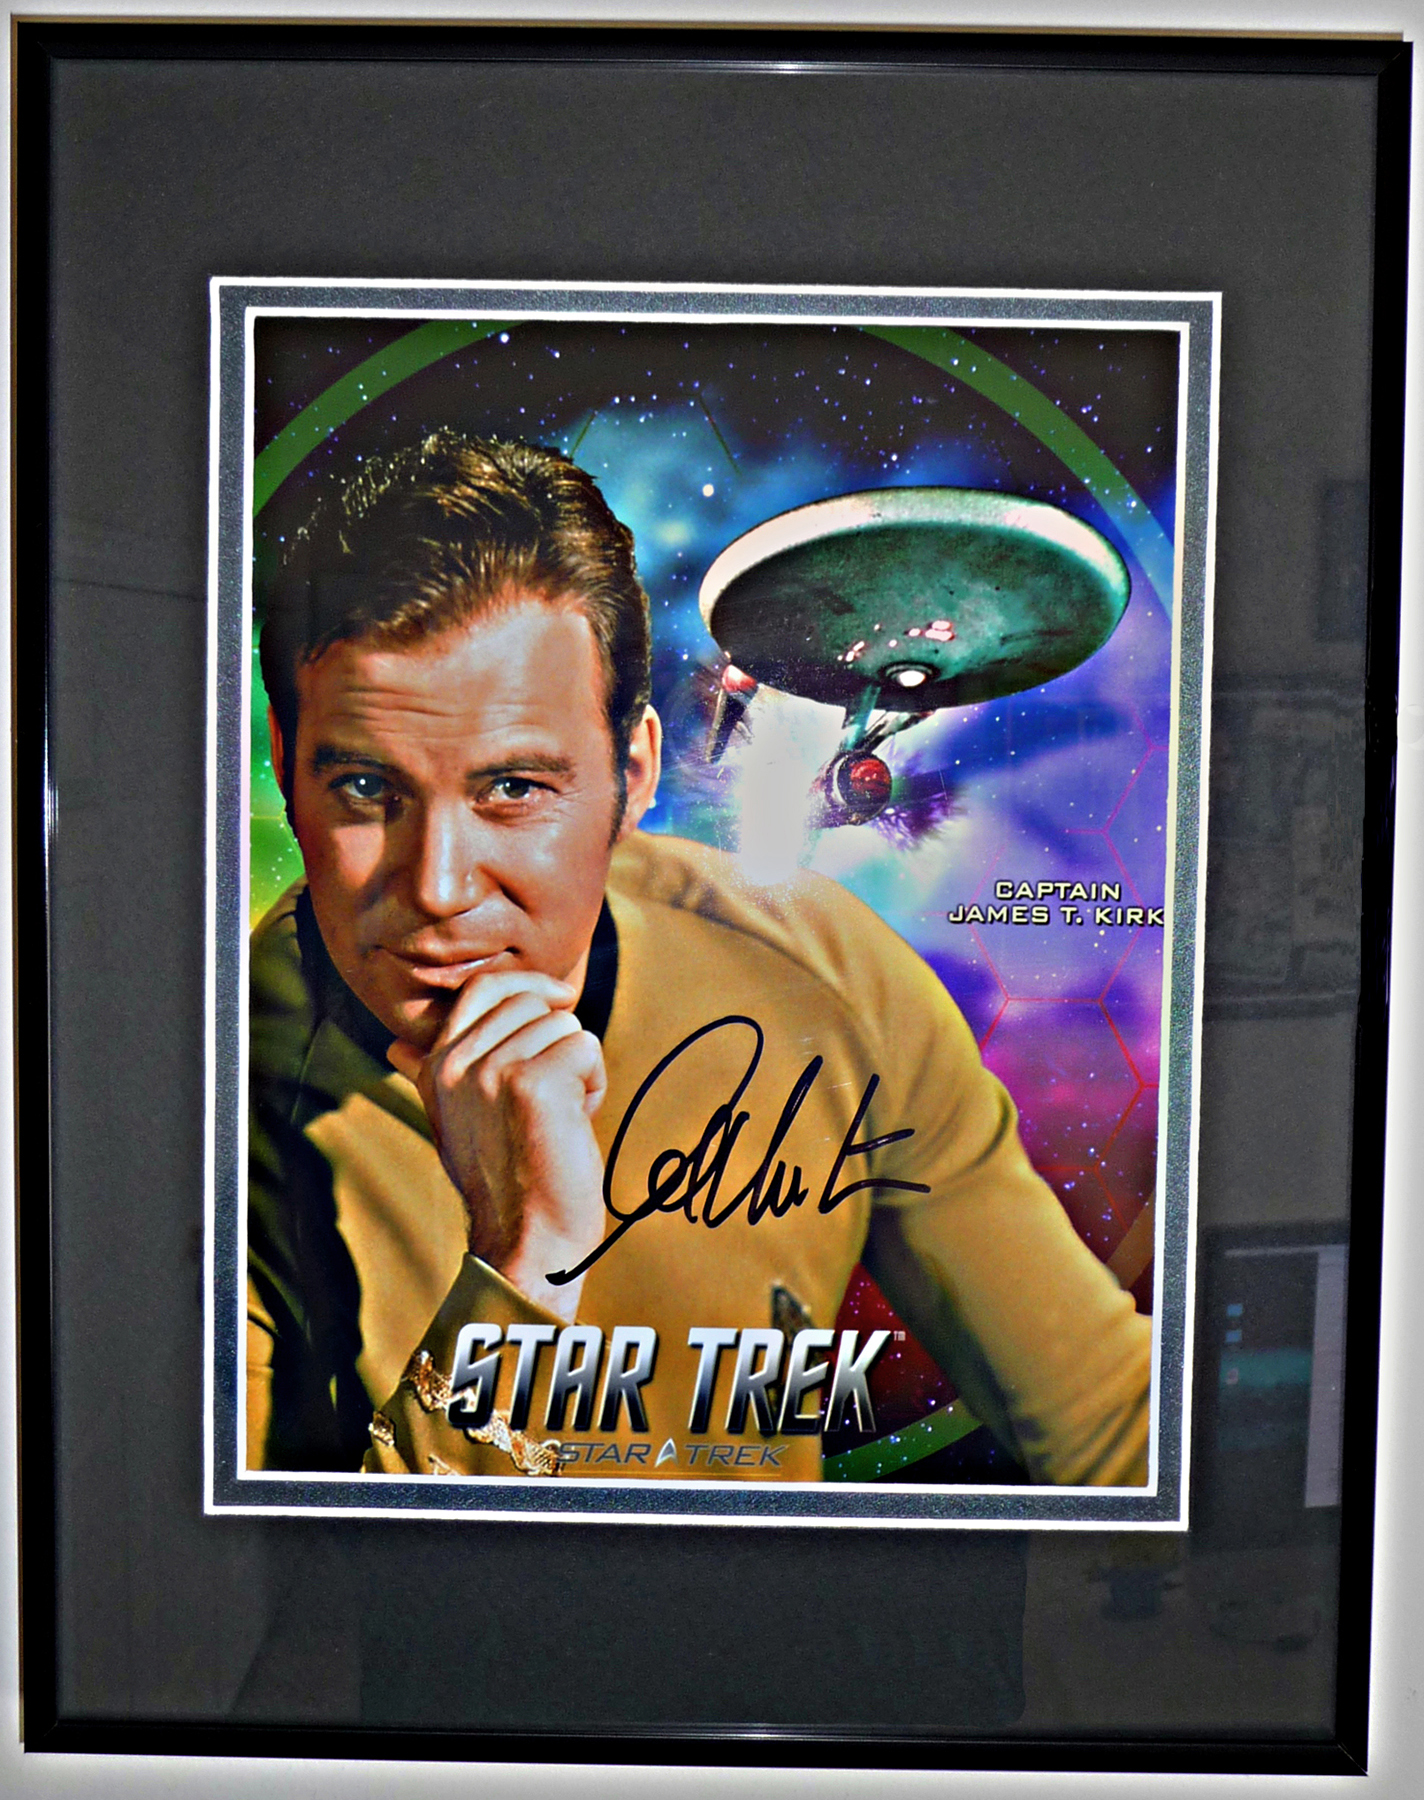 William Shatner autograph - Kirk.jpg